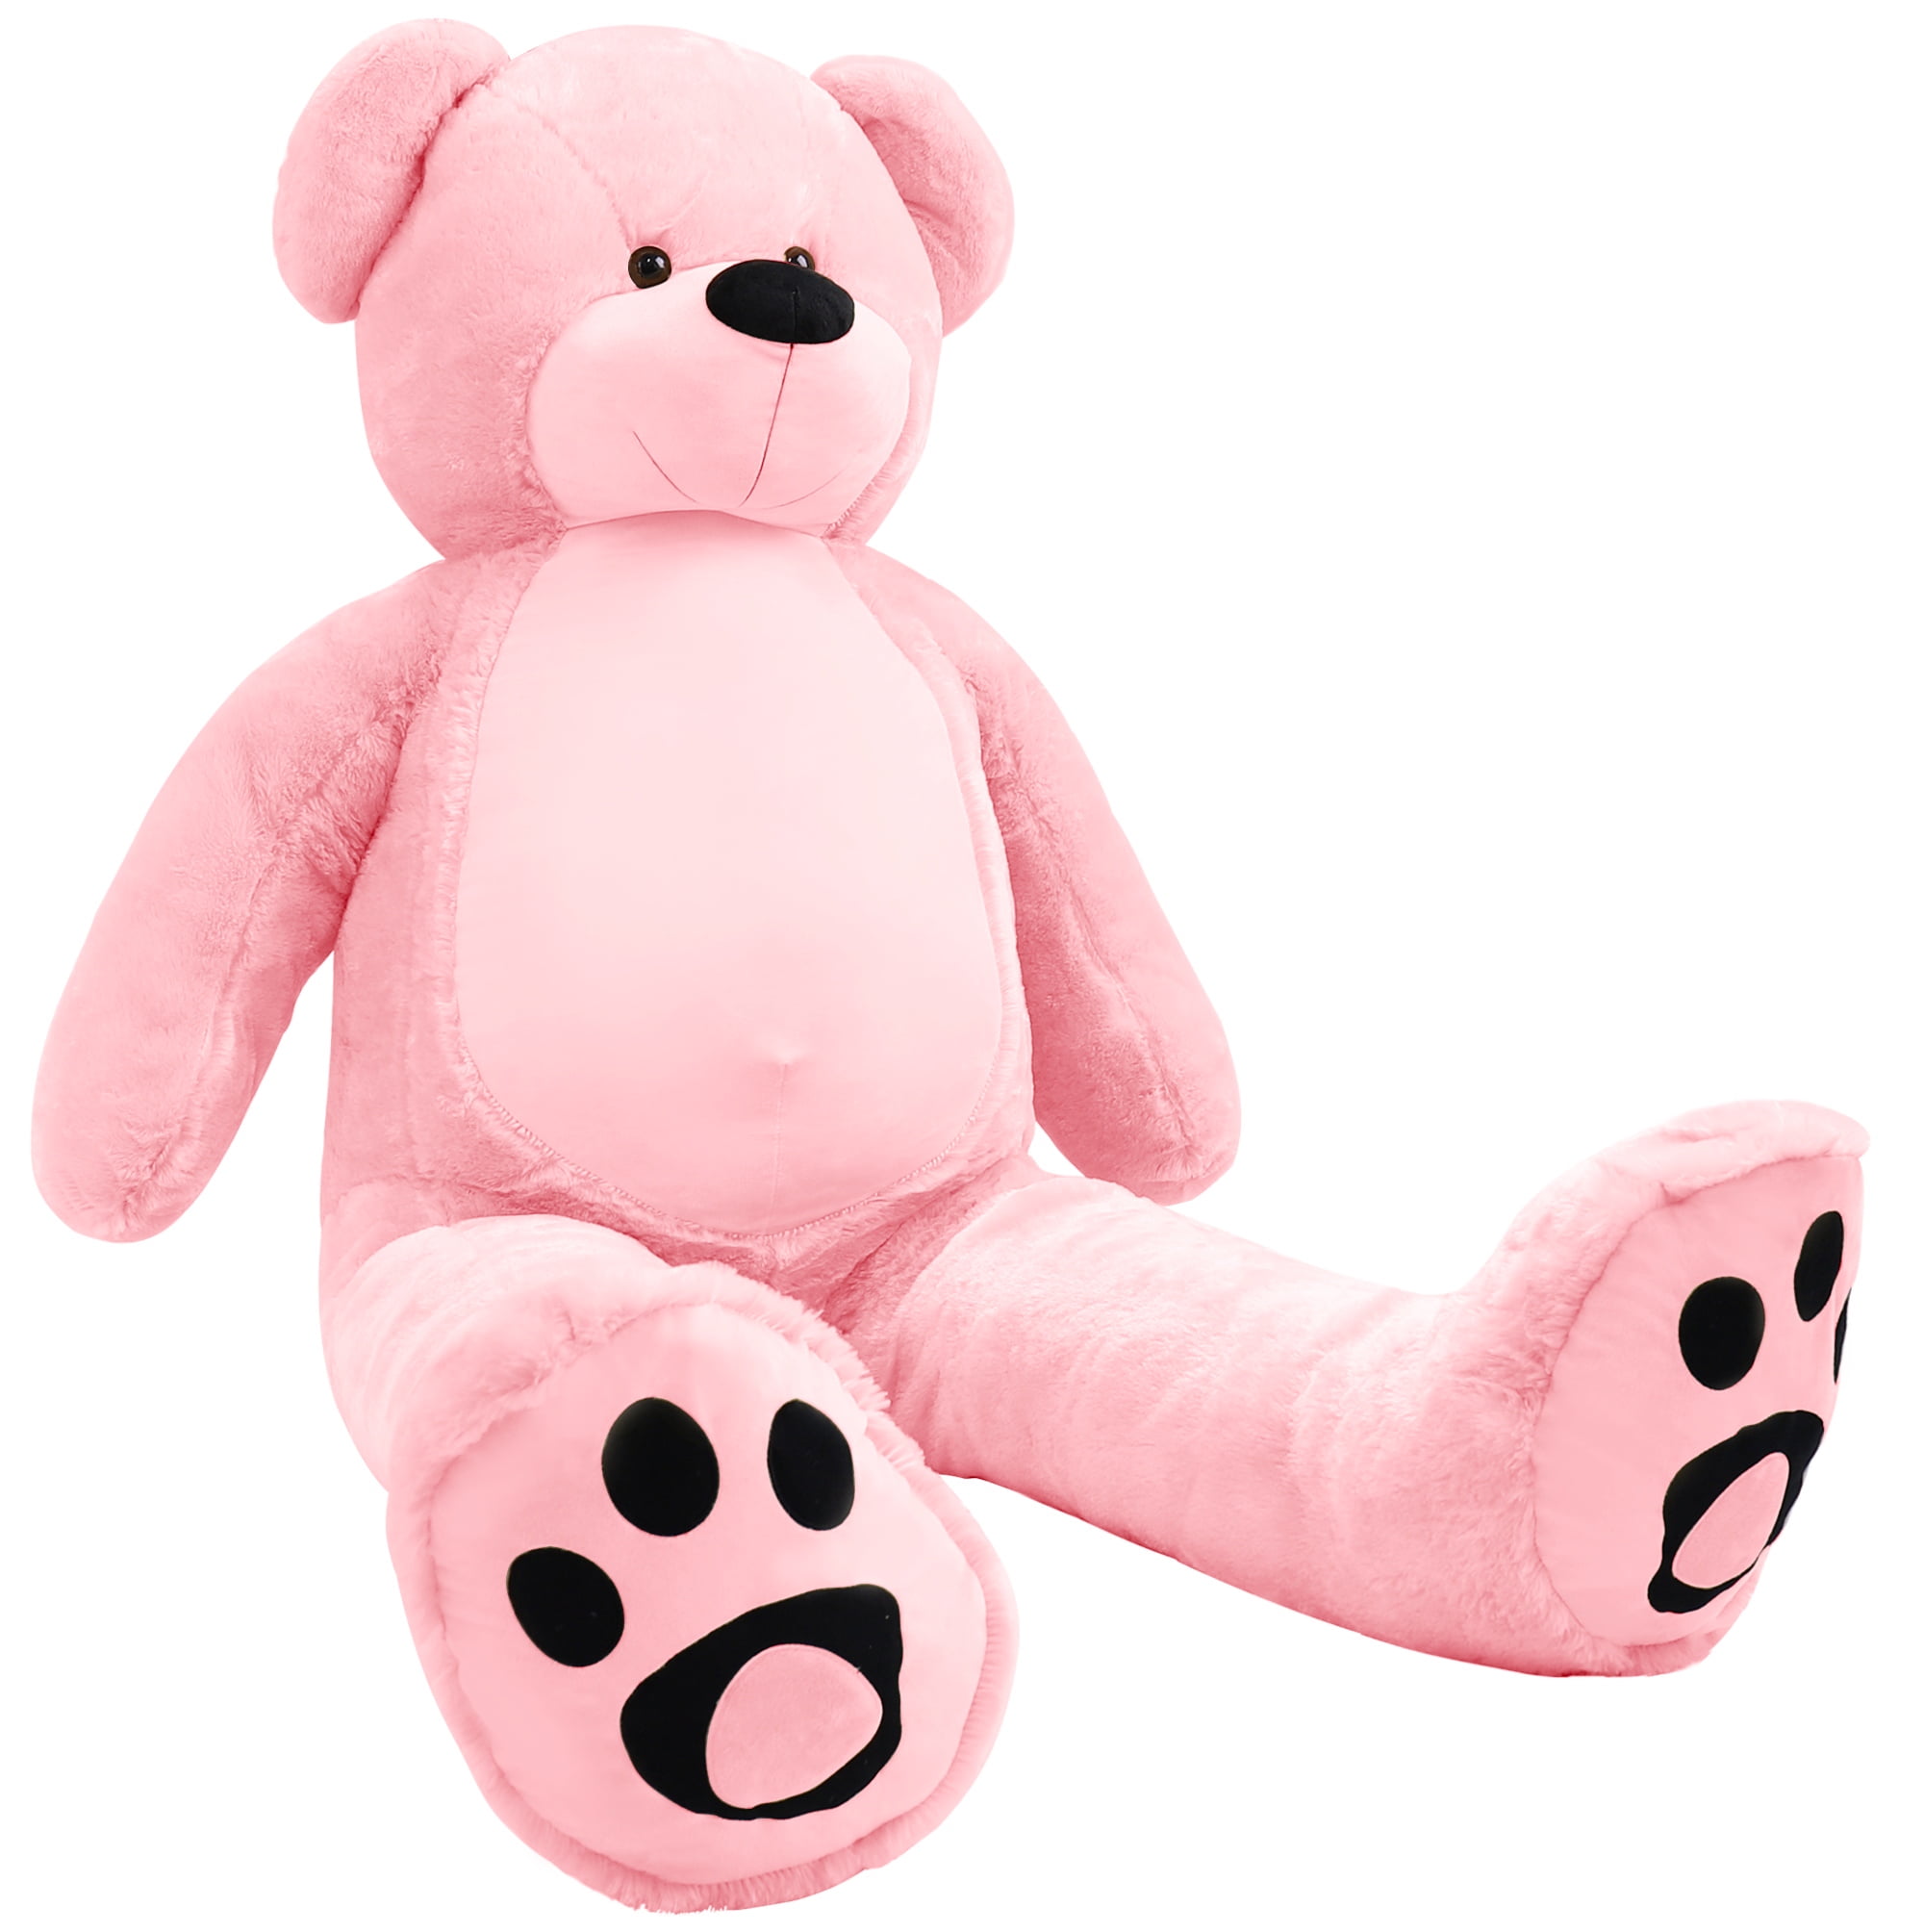 Hot Giant Huge Plush Teddy Bear Winnie The Pooh Stuffed Animal Soft Toy 80cm/32"